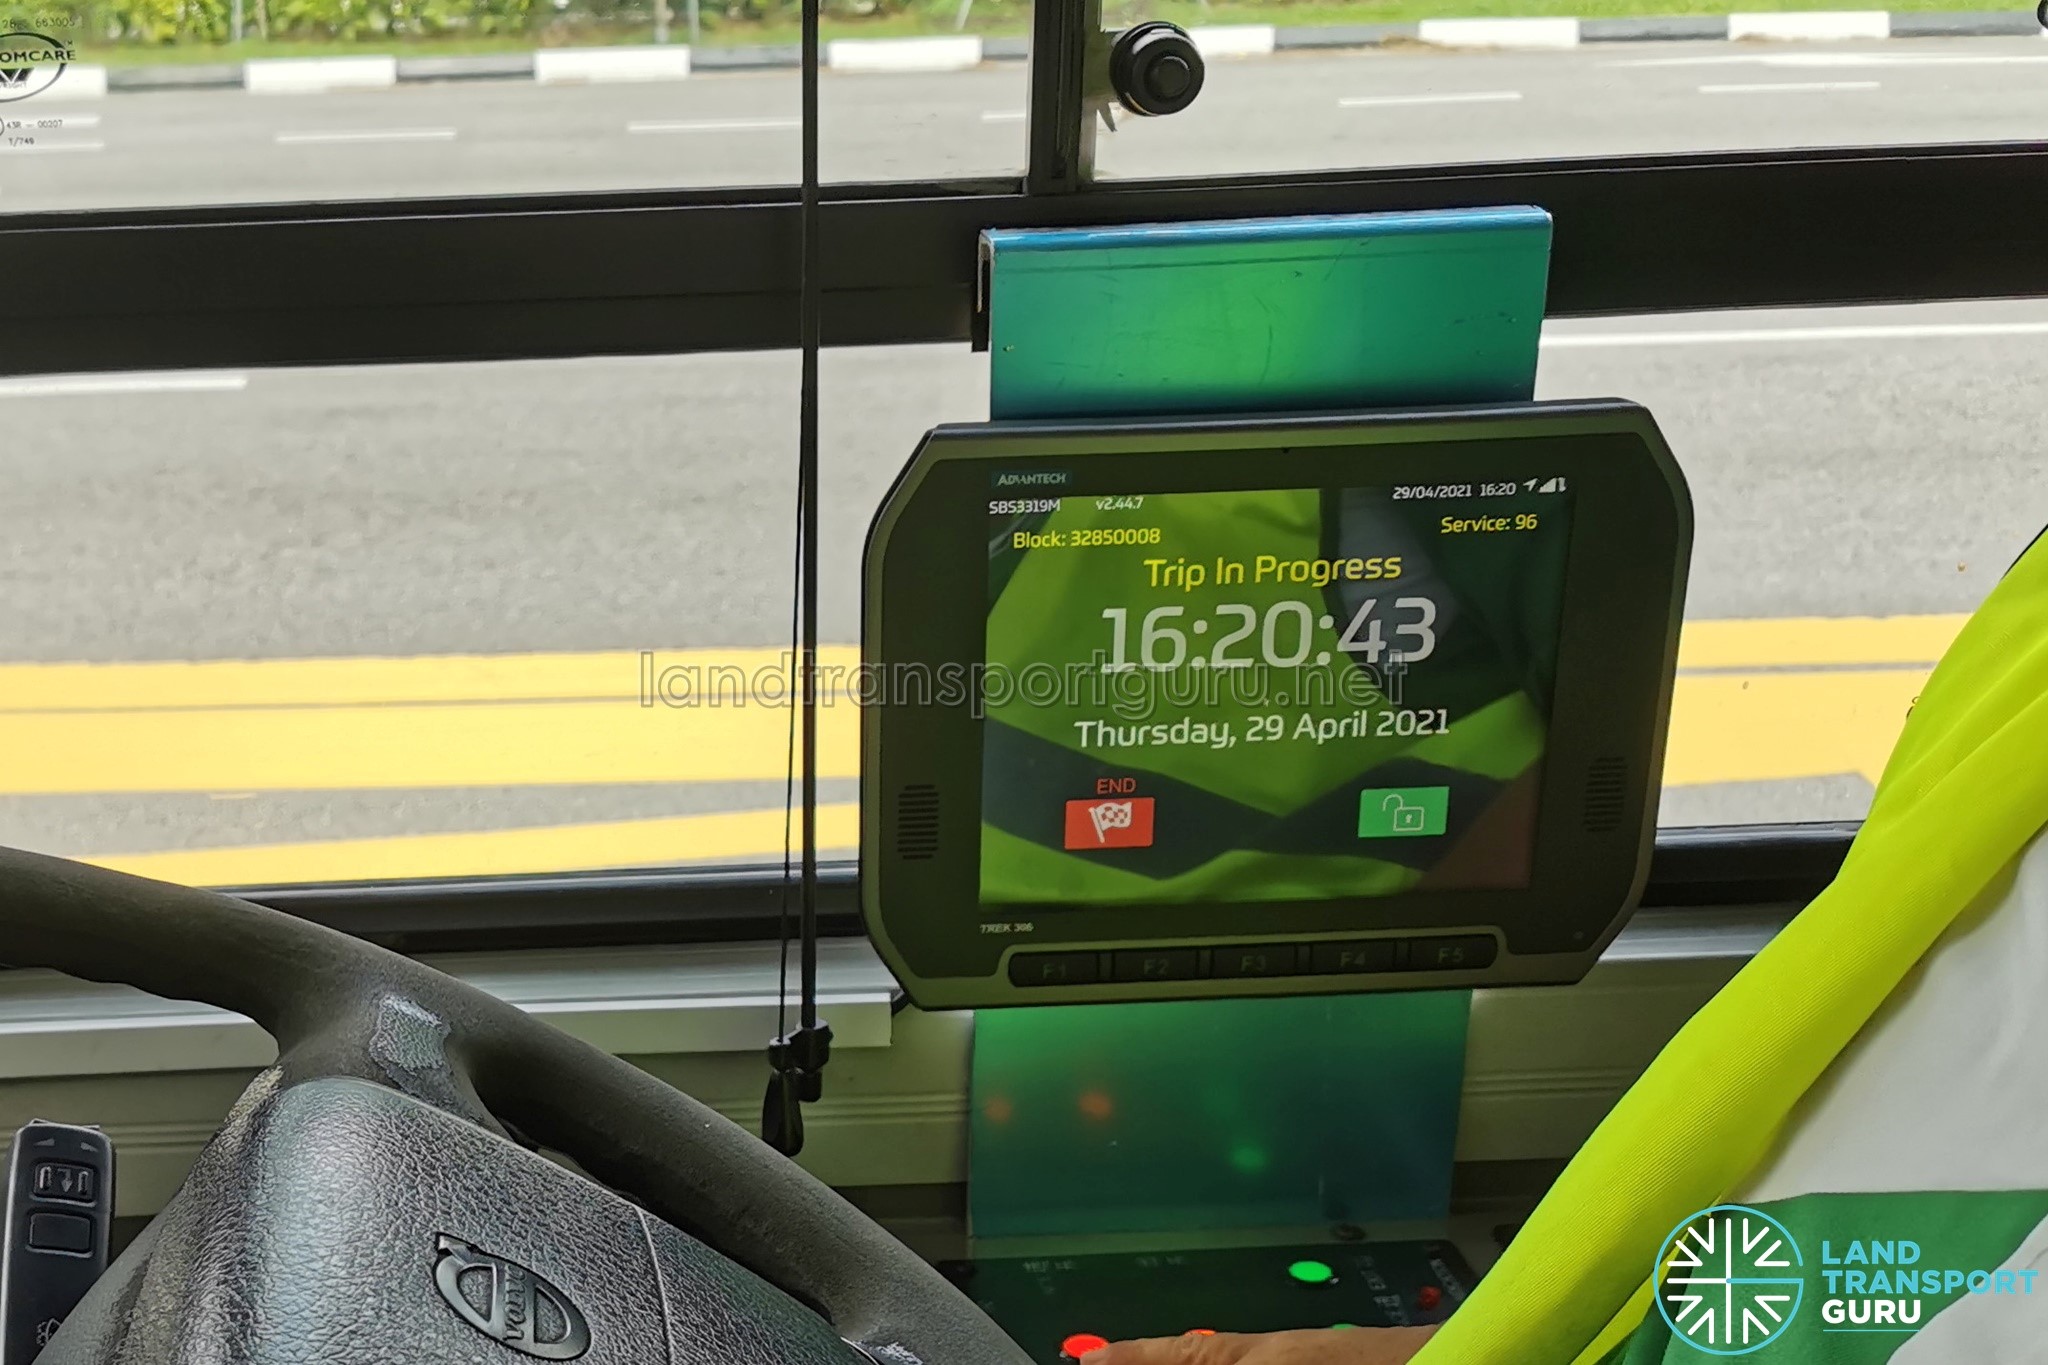 Advantech Fleet Management Solution trialed on Tower Transit buses